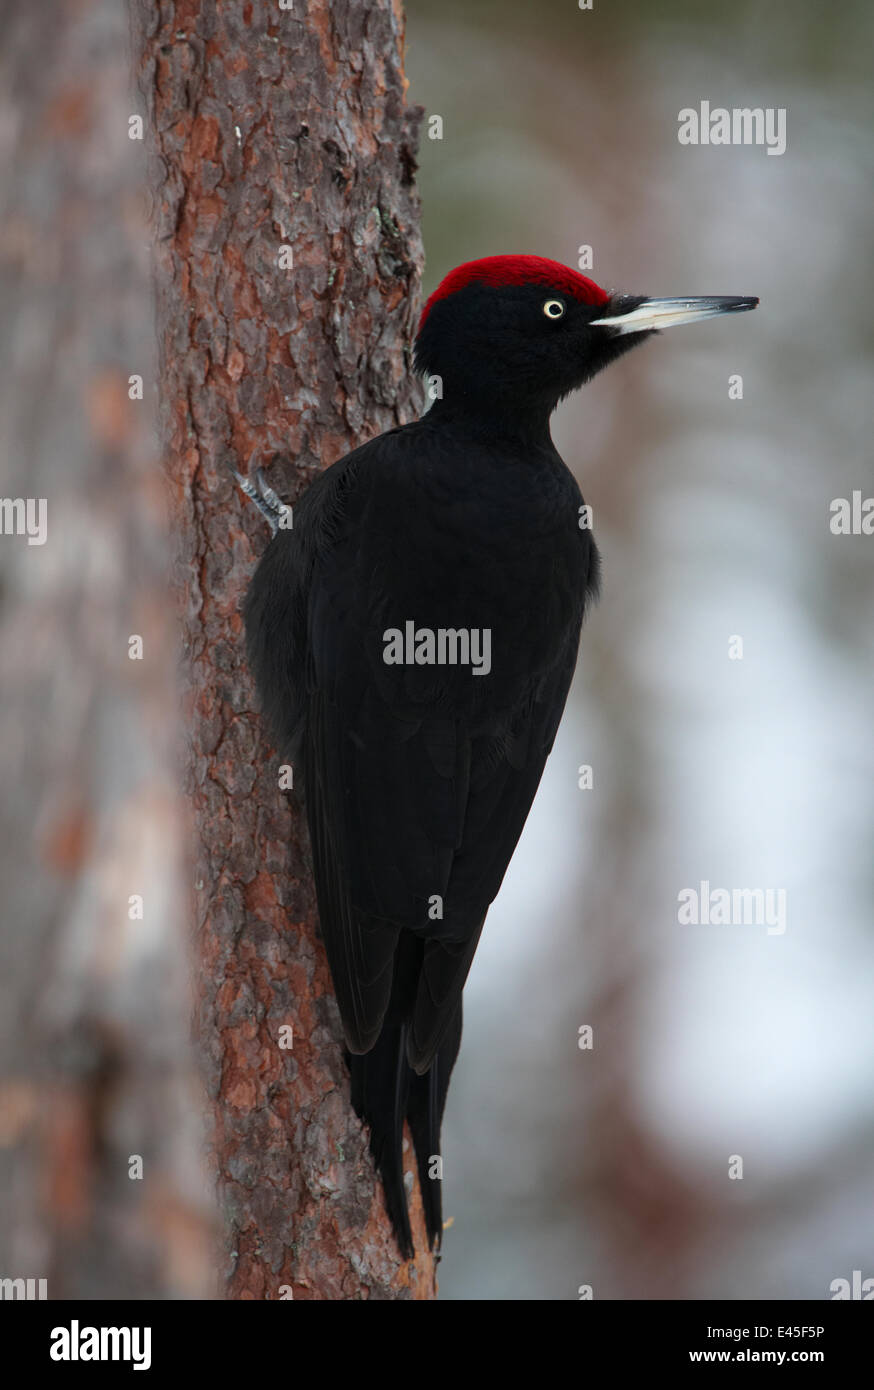 Black woodpecker (Dryocopus martius) on tree trunk, Korouma, Posio, Finland, February 2009 Stock Photo